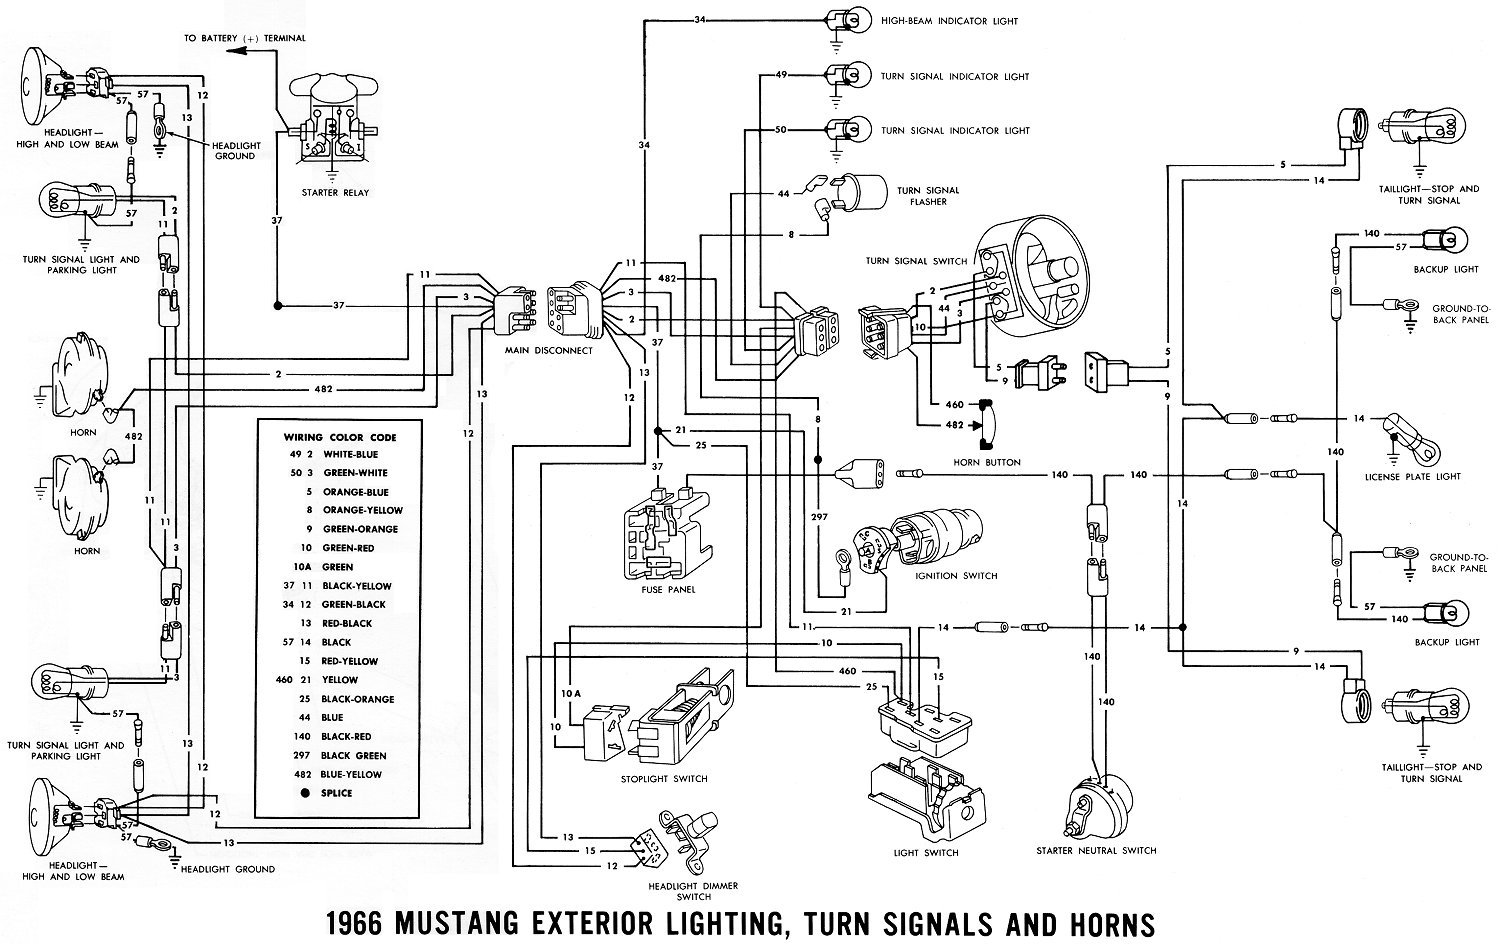 2001 Ford Mustang Spark Plug Wiring Diagram from averagejoerestoration.com